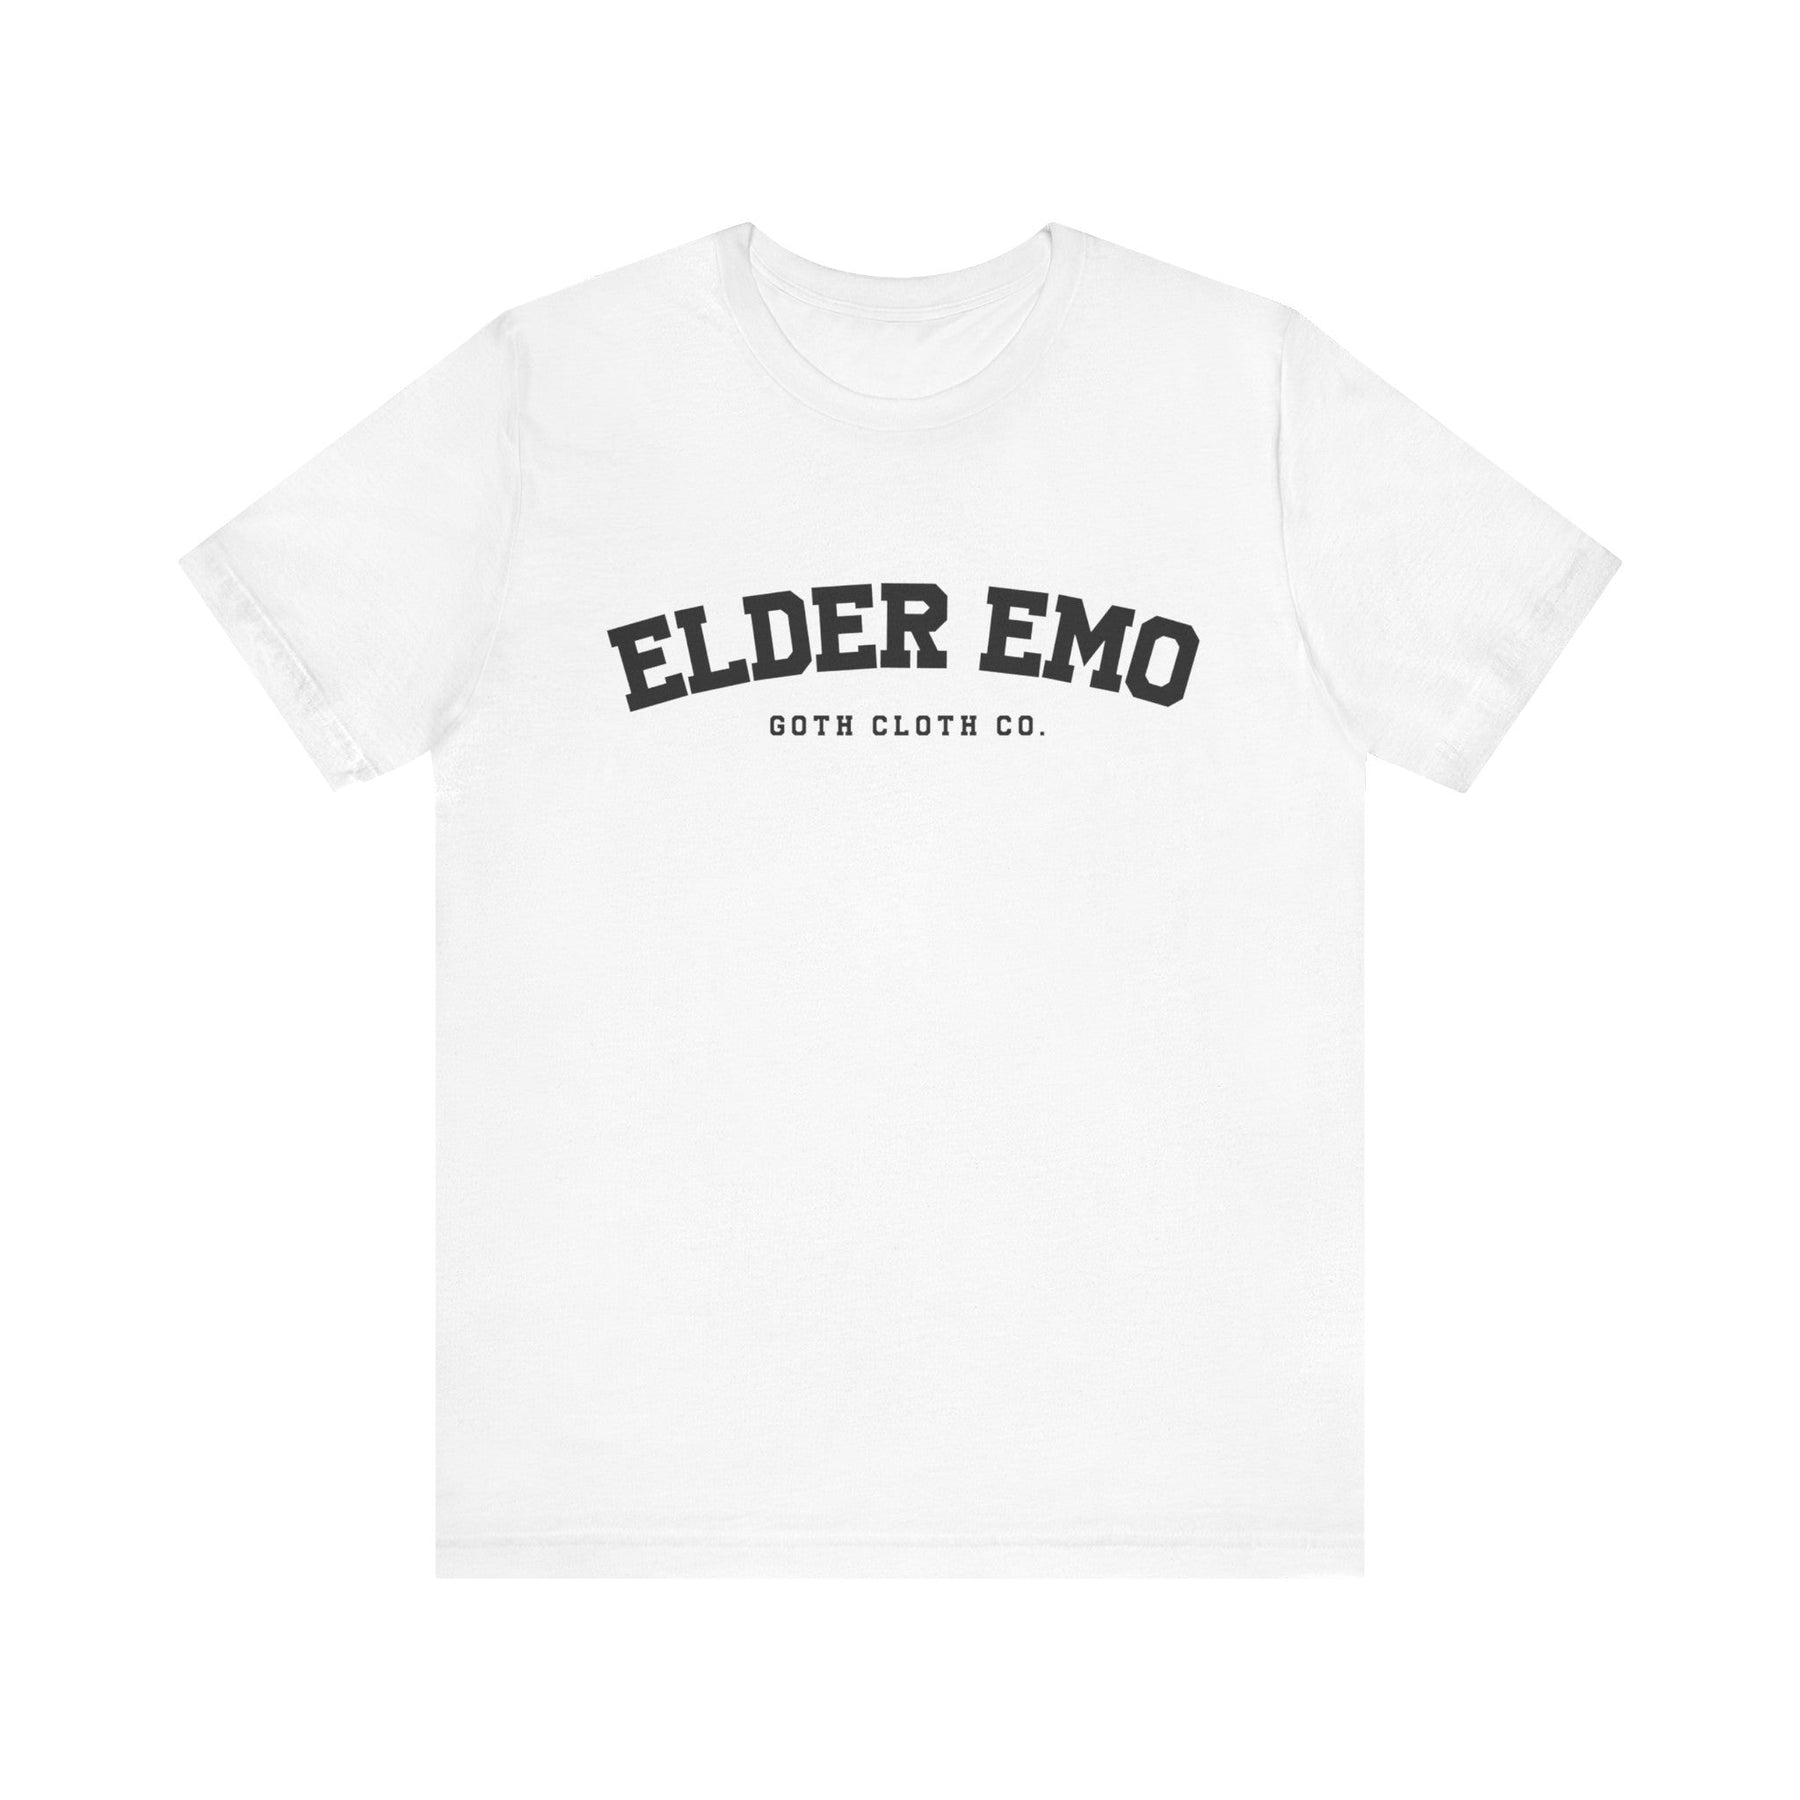 Elder Emo Short Sleeve Tee - Goth Cloth Co.T - Shirt10297789587316833213